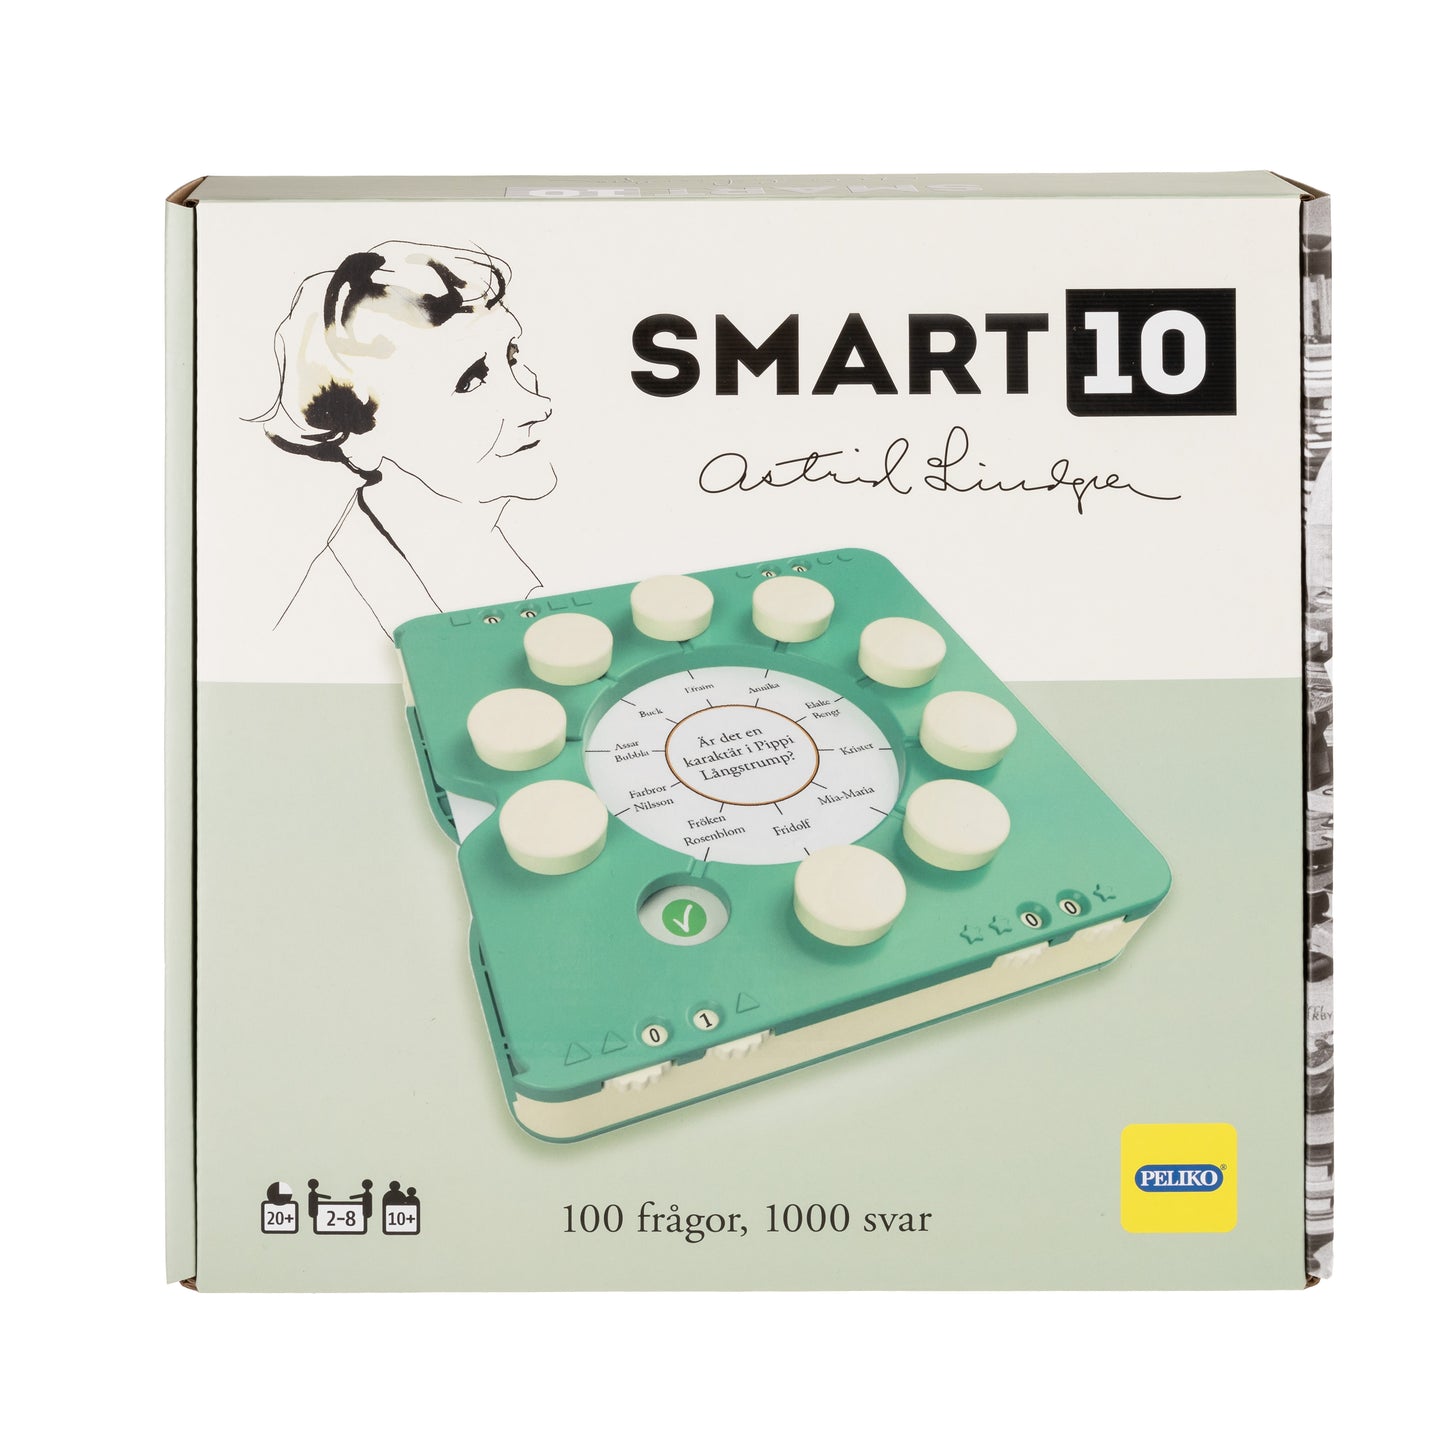 Smart 10 | Astrid Lindgren | Spel